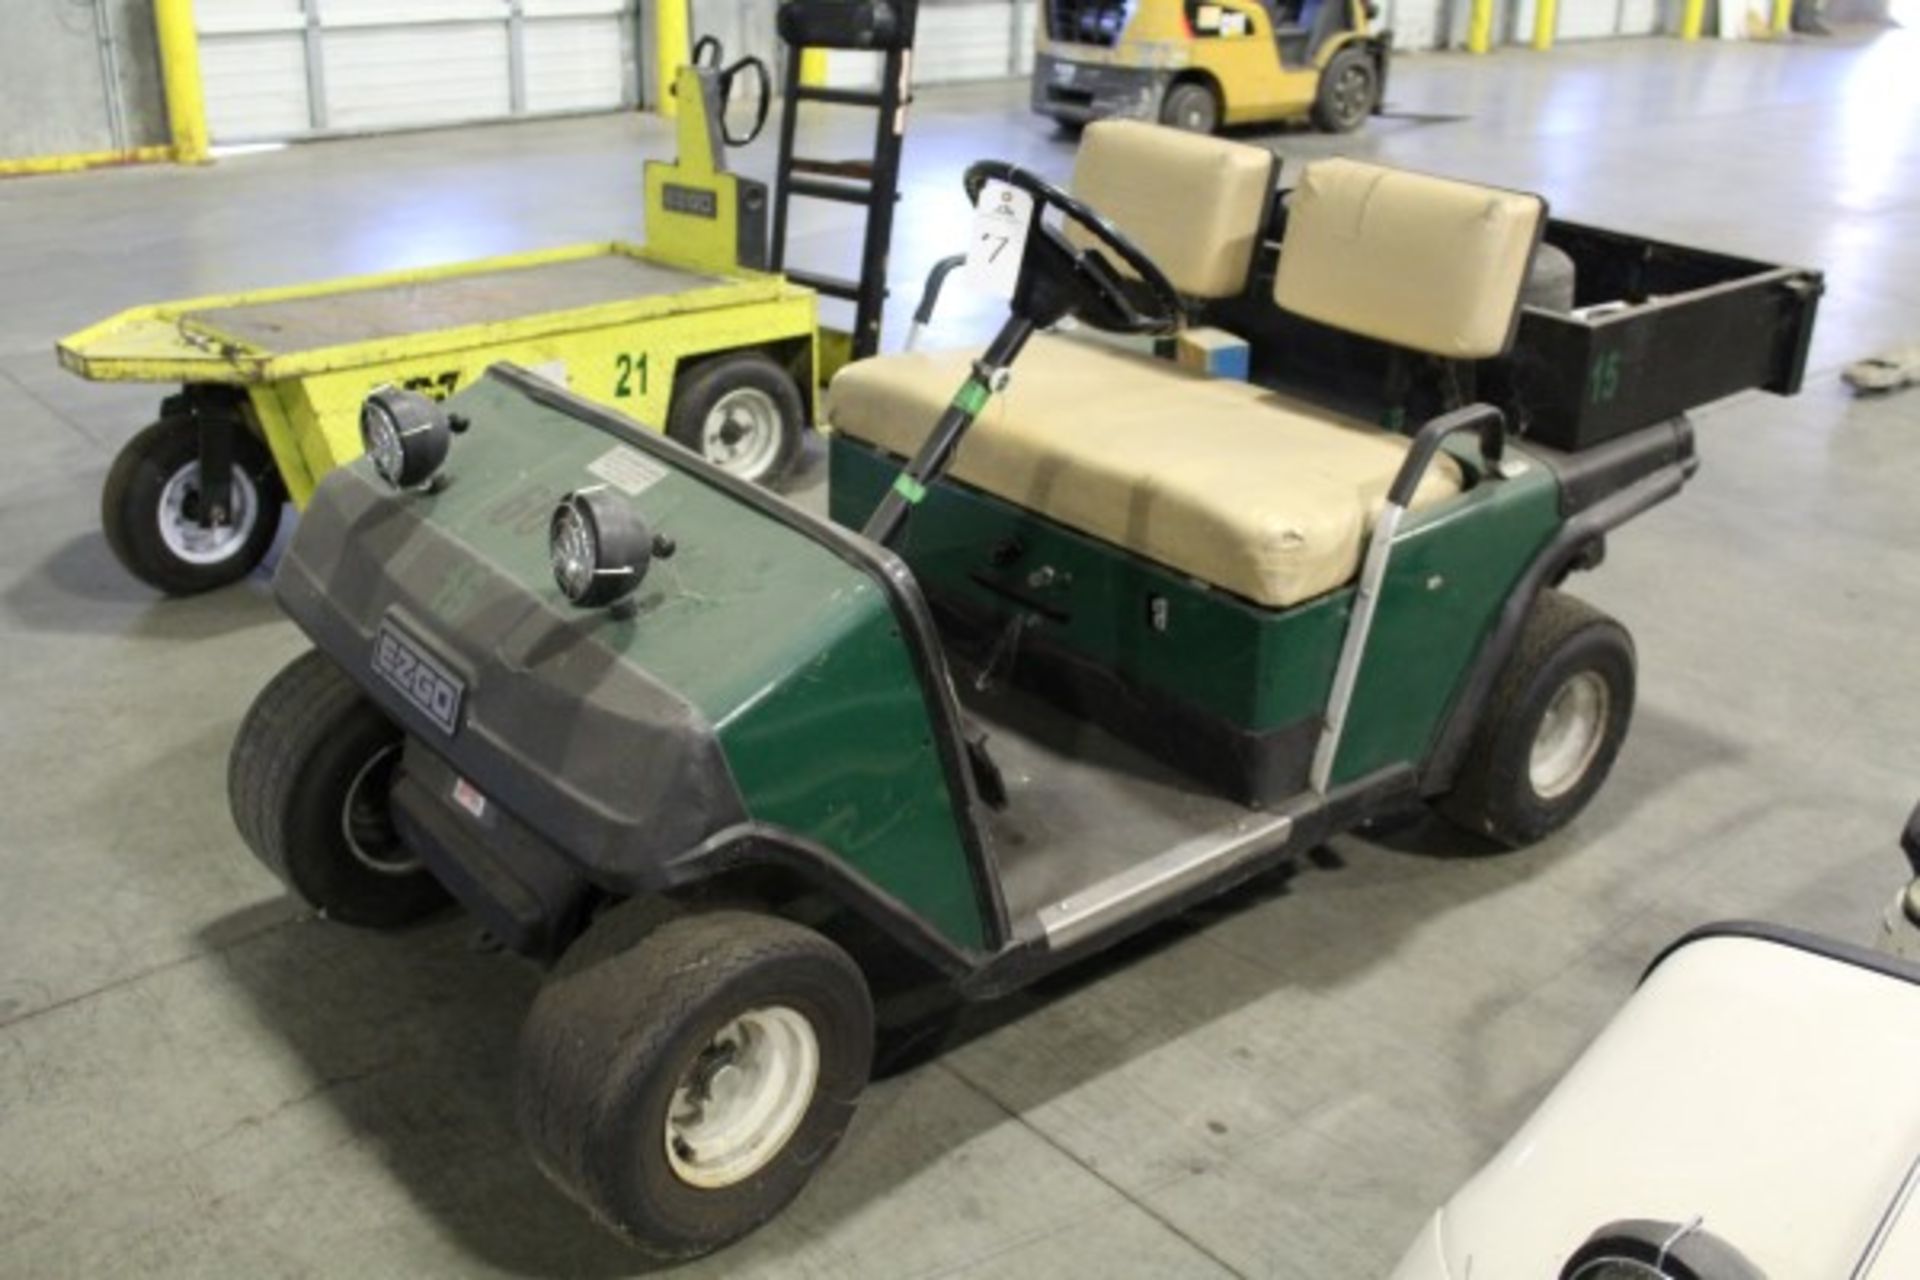 EZ-Go Golf Cart, Mfg. Code J0893, S/N 764253, (Out of Service, Batteries)